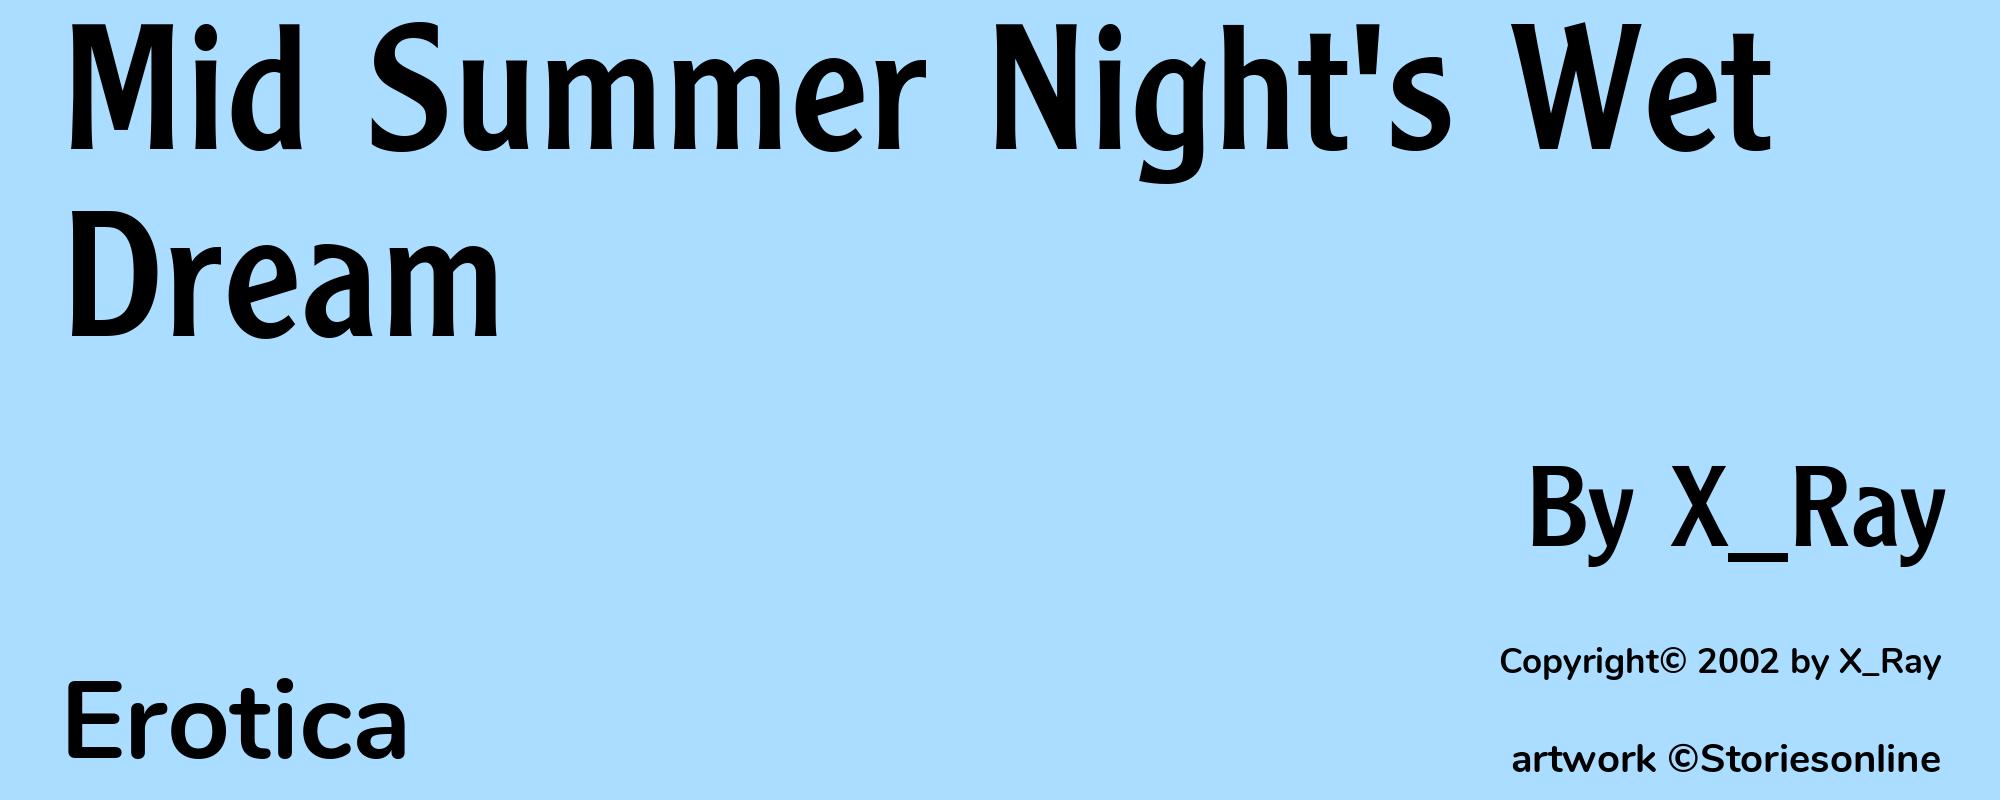 Mid Summer Night's Wet Dream - Cover